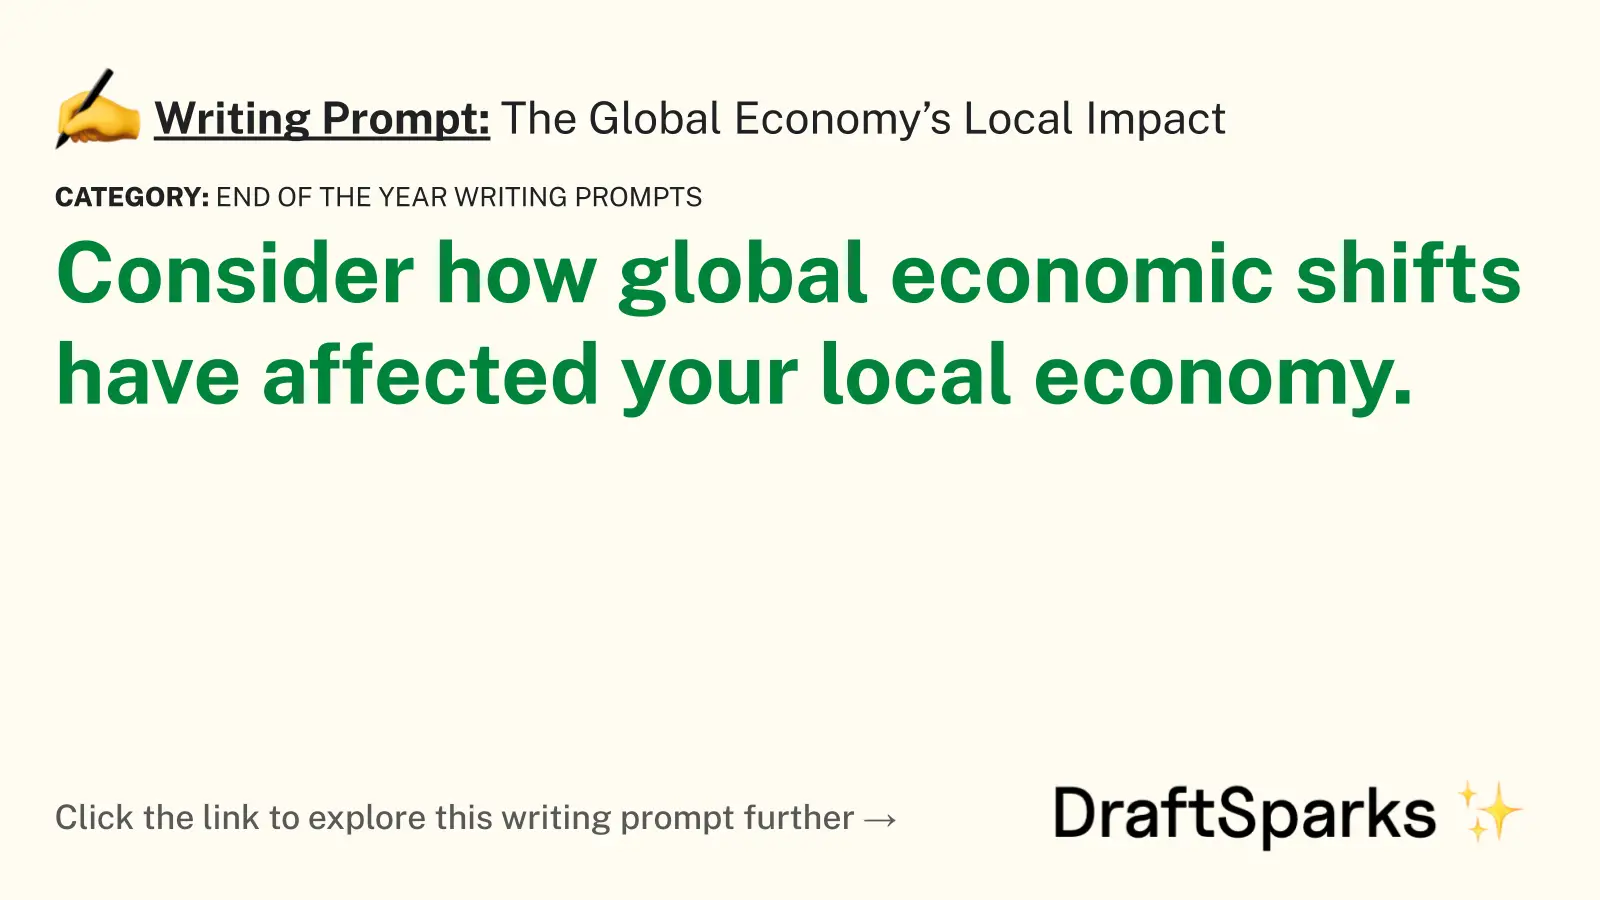 The Global Economy’s Local Impact